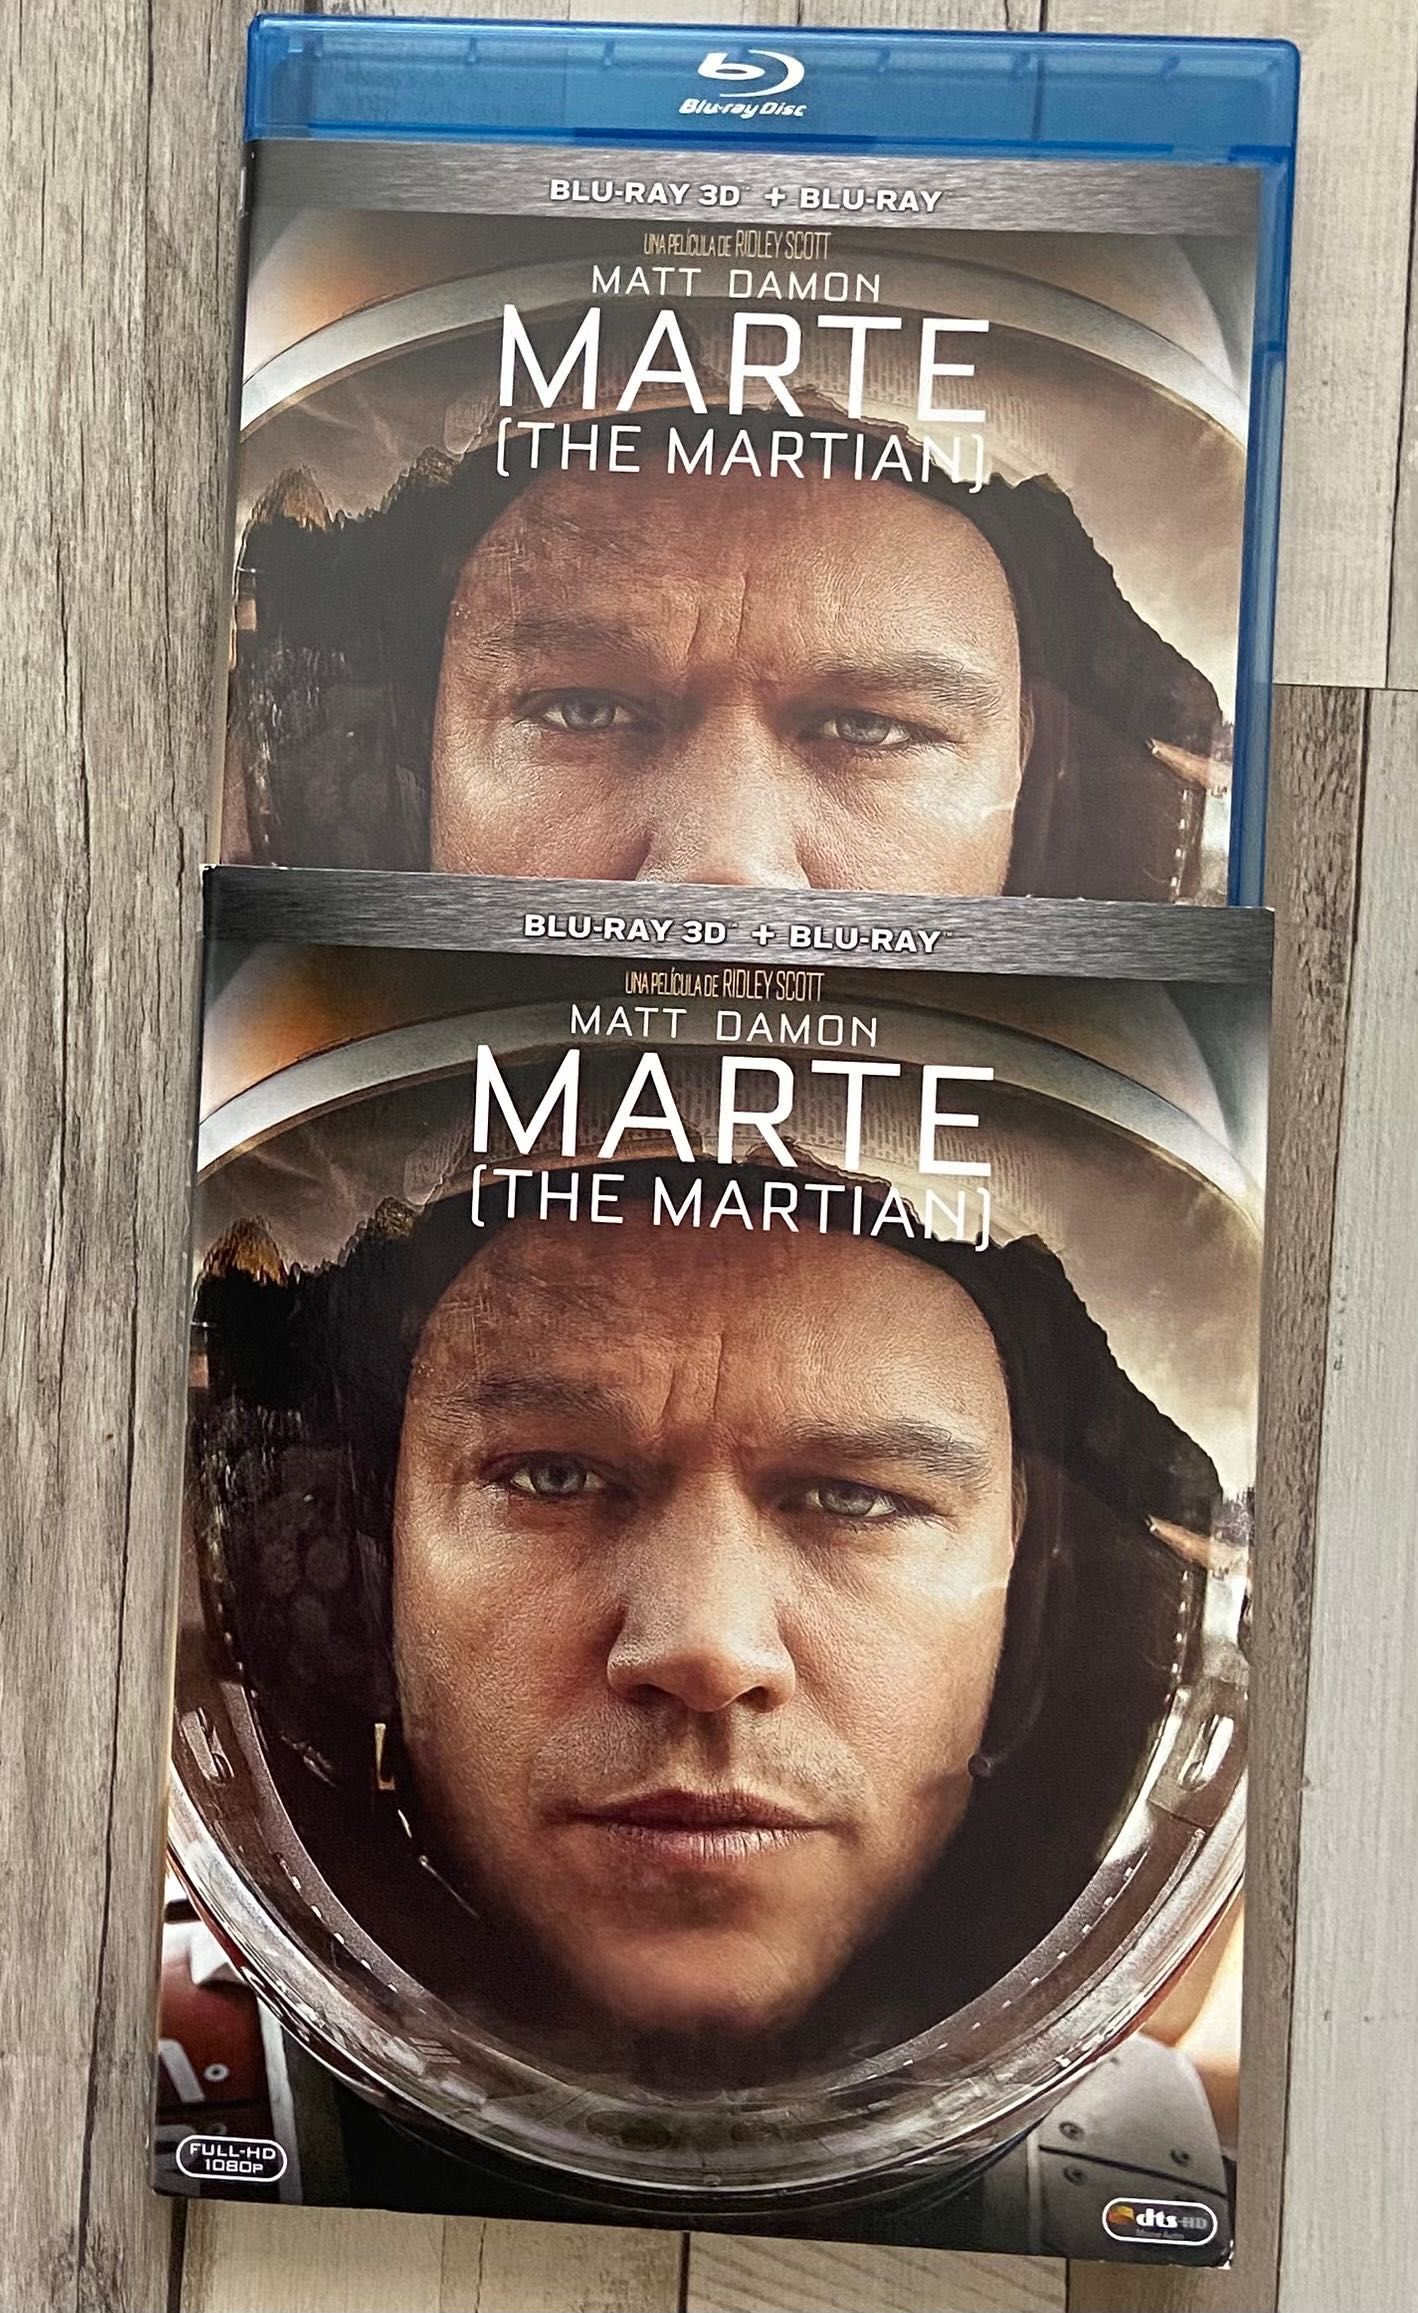 Film Martianul (The Martian) blu-ray 3D